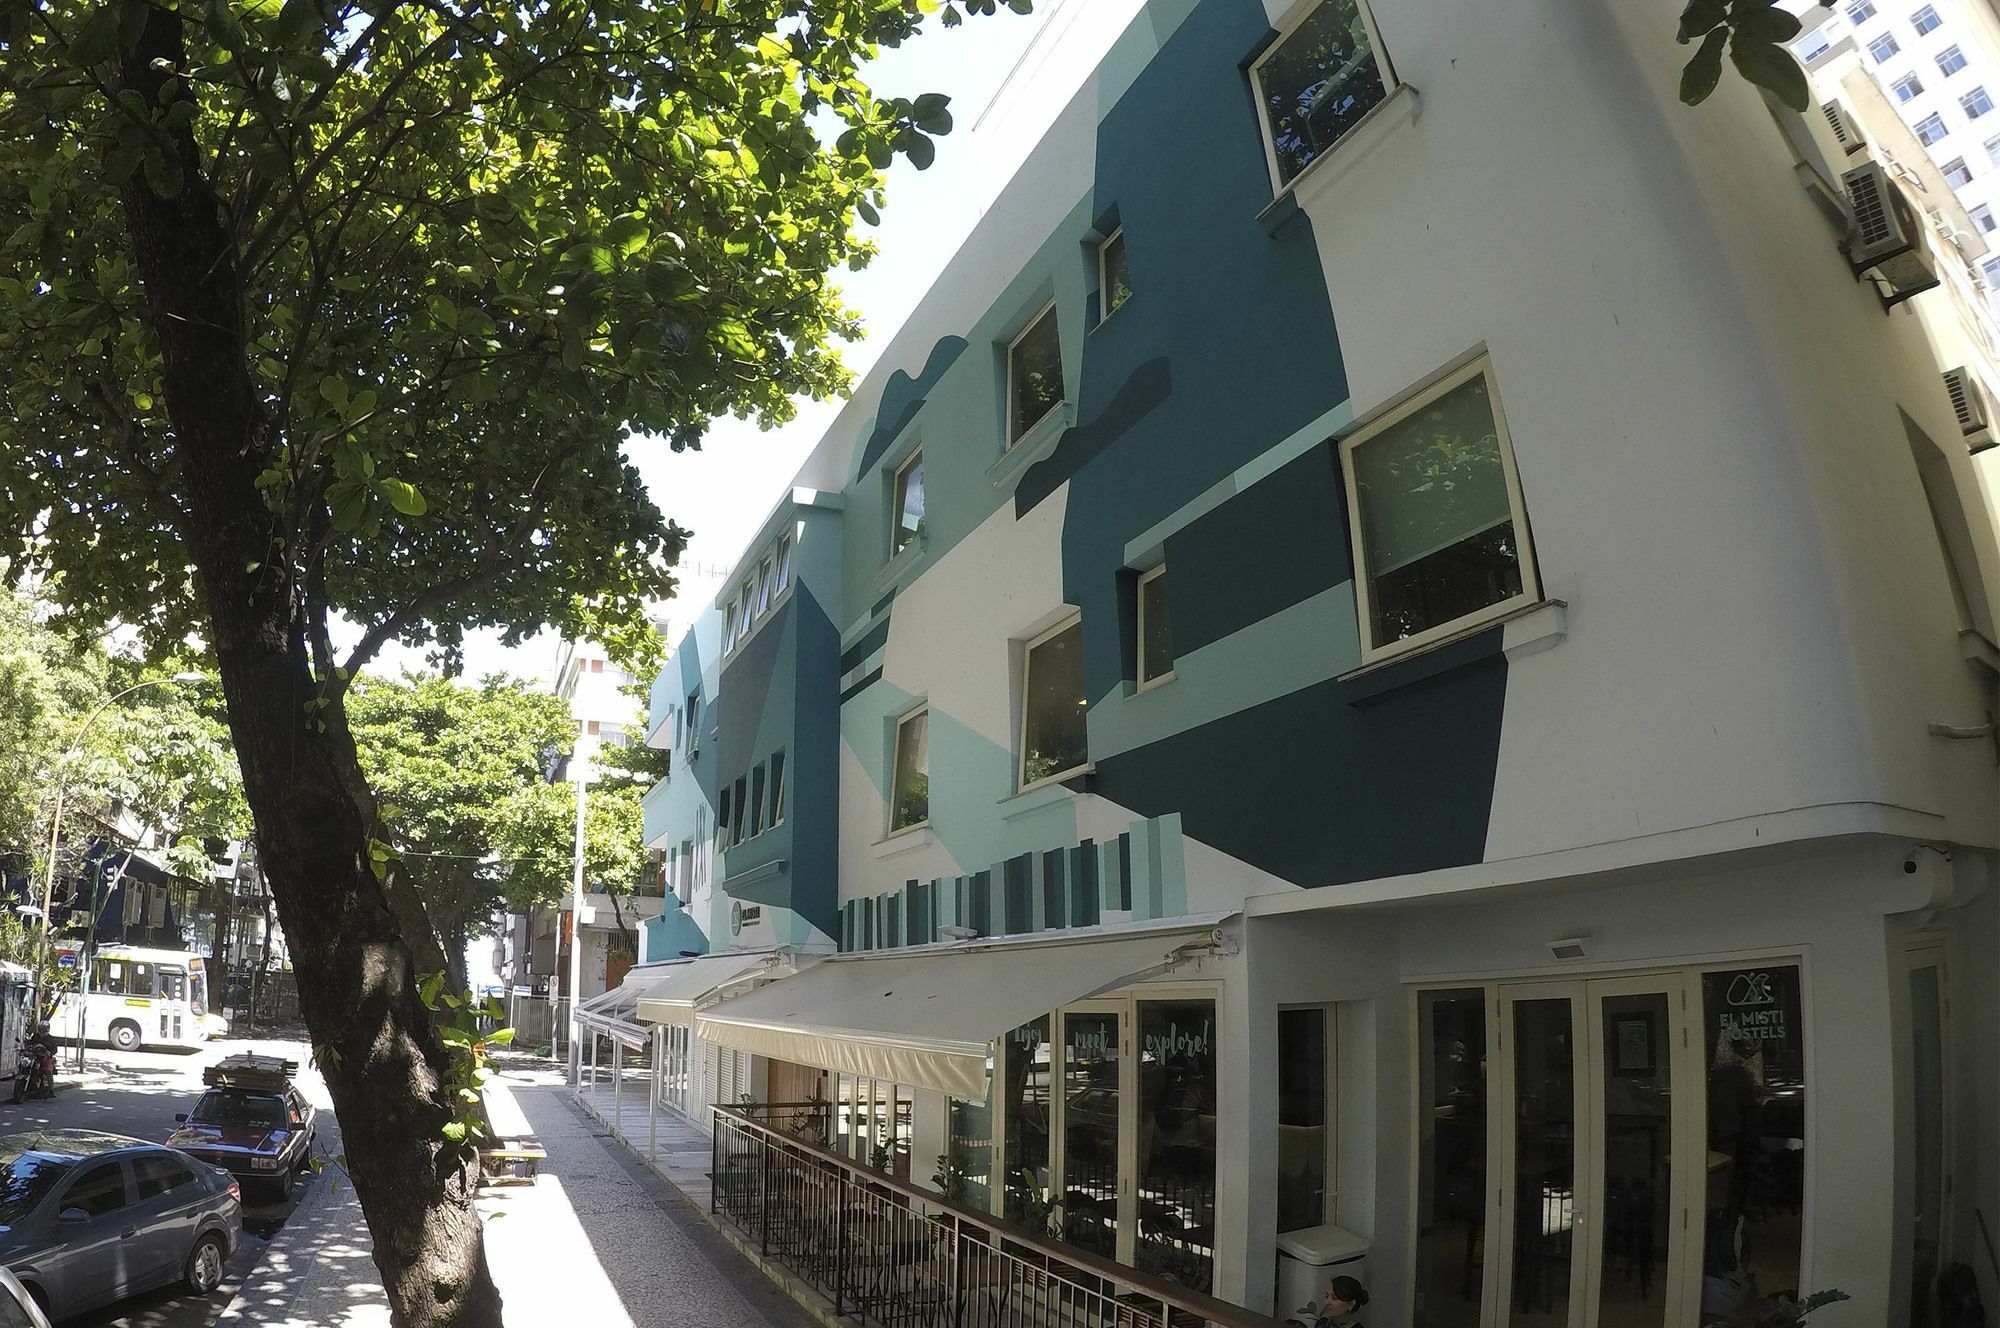 El Misti Hostel Ipanema Rio de Janeiro Exterior photo